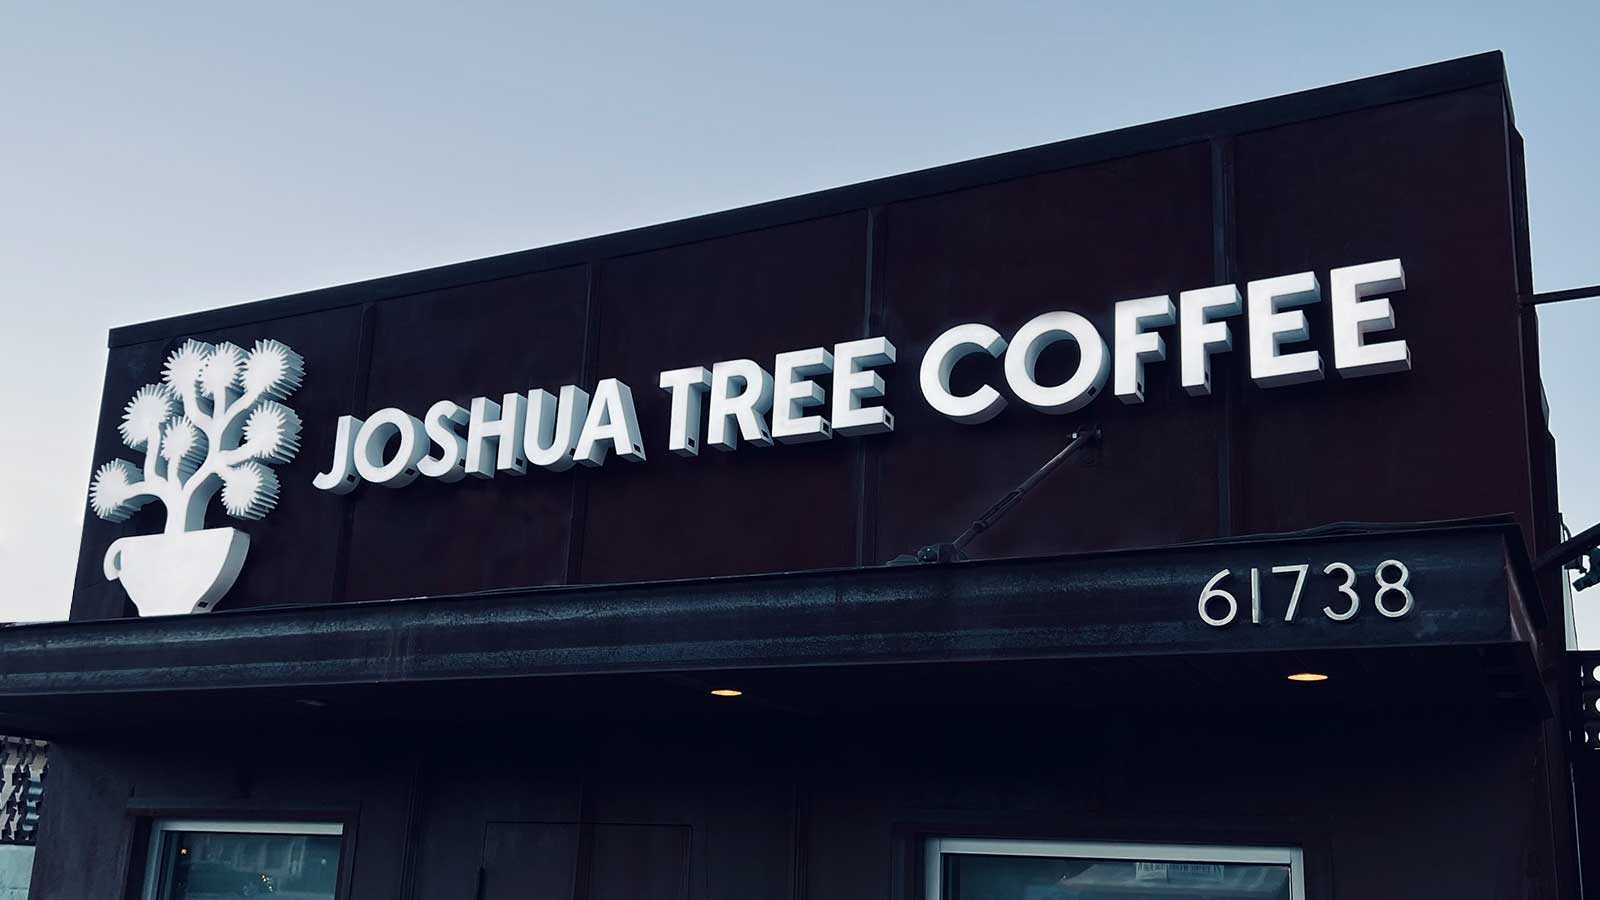 joshua tree coffe illuminated building sign